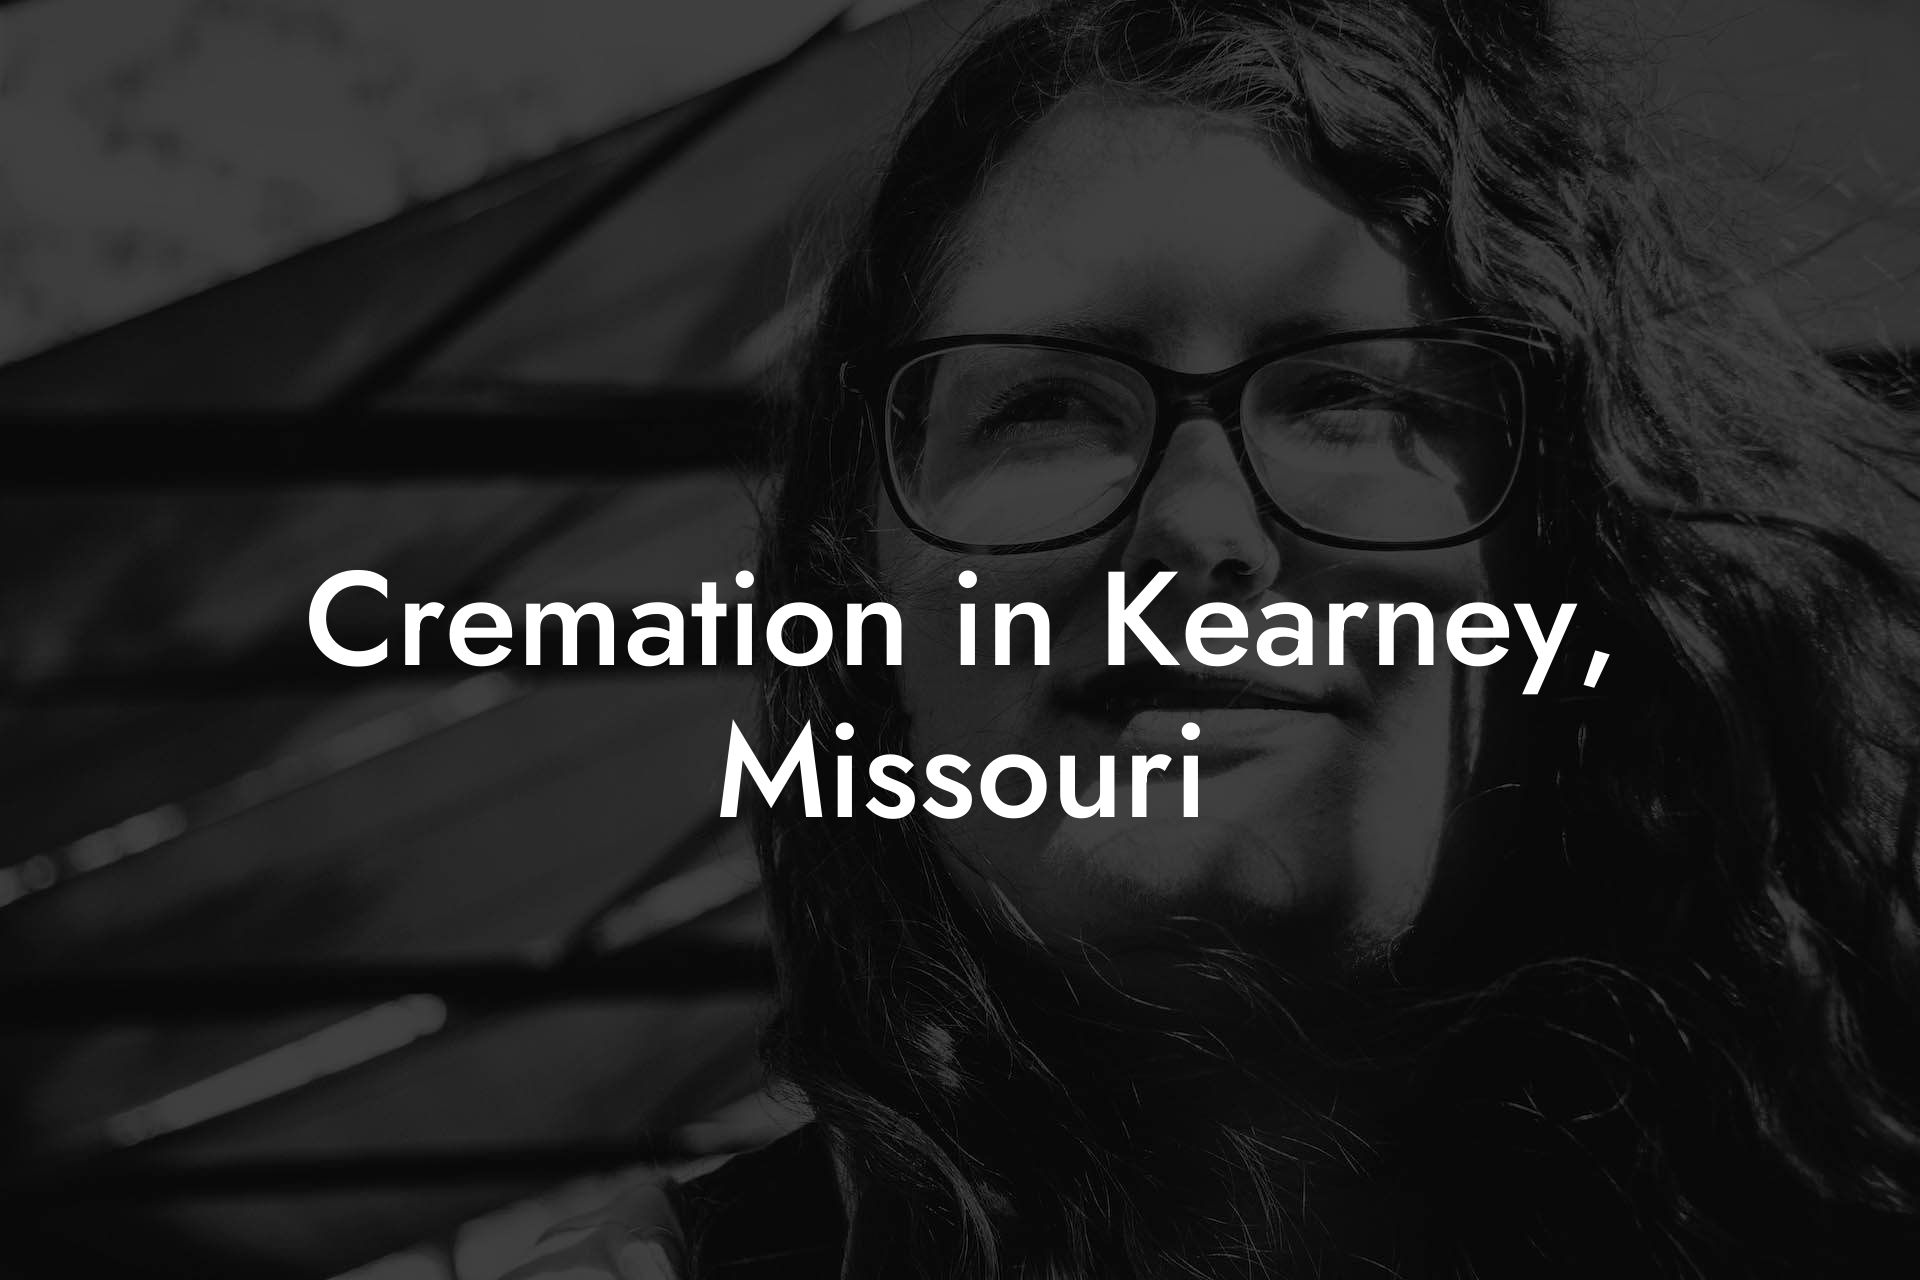 Cremation in Kearney, Missouri